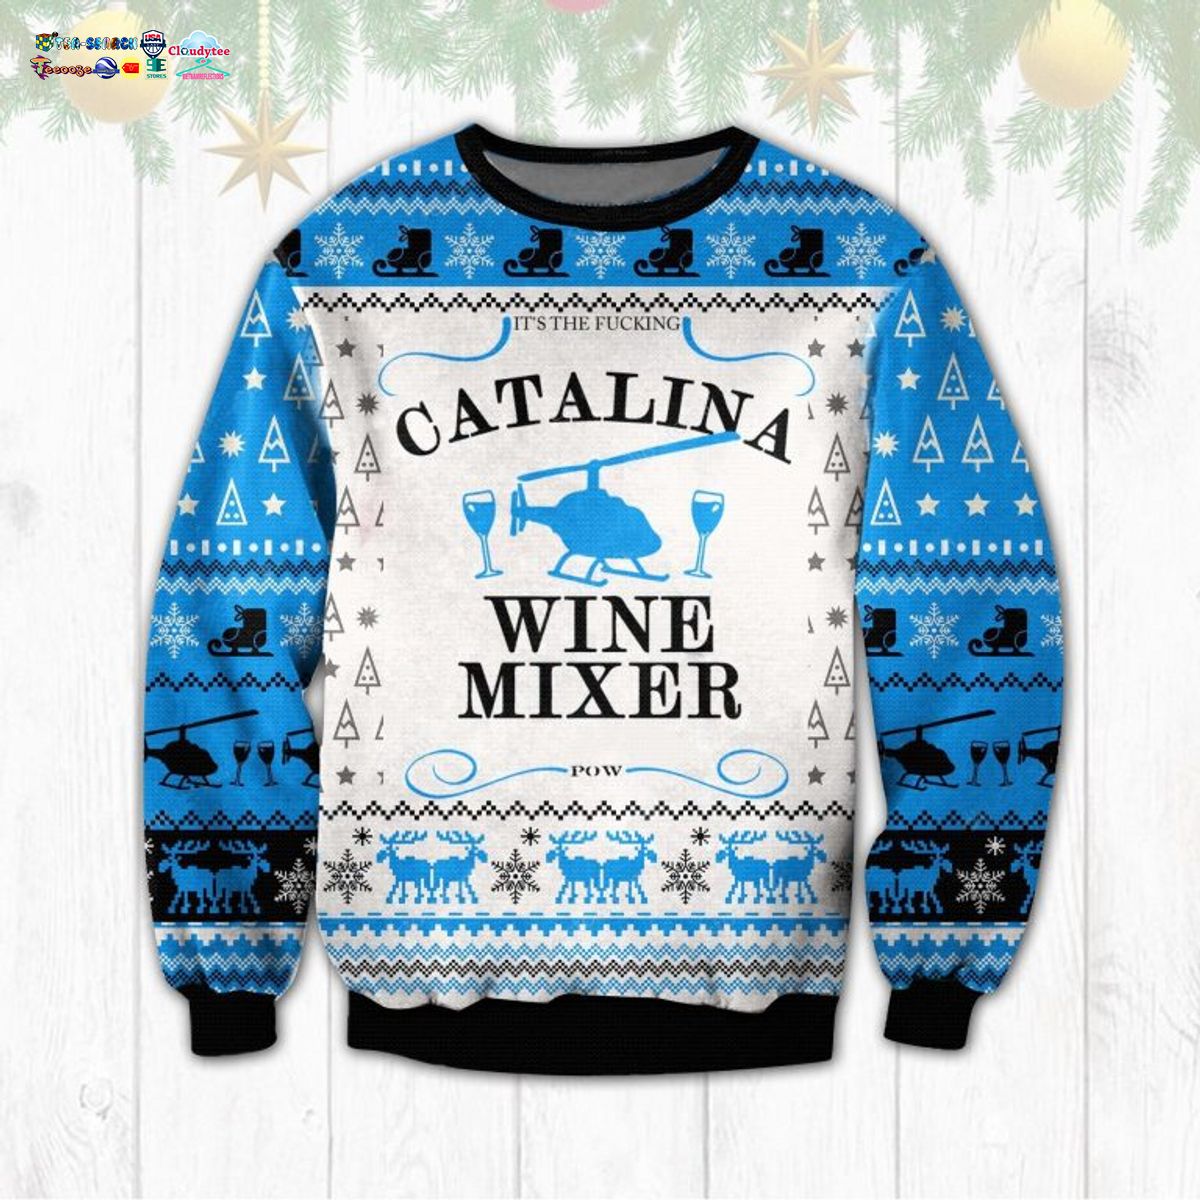 It’s The Fucking Catalina Wine Mixer Pow Ugly Christmas Sweater